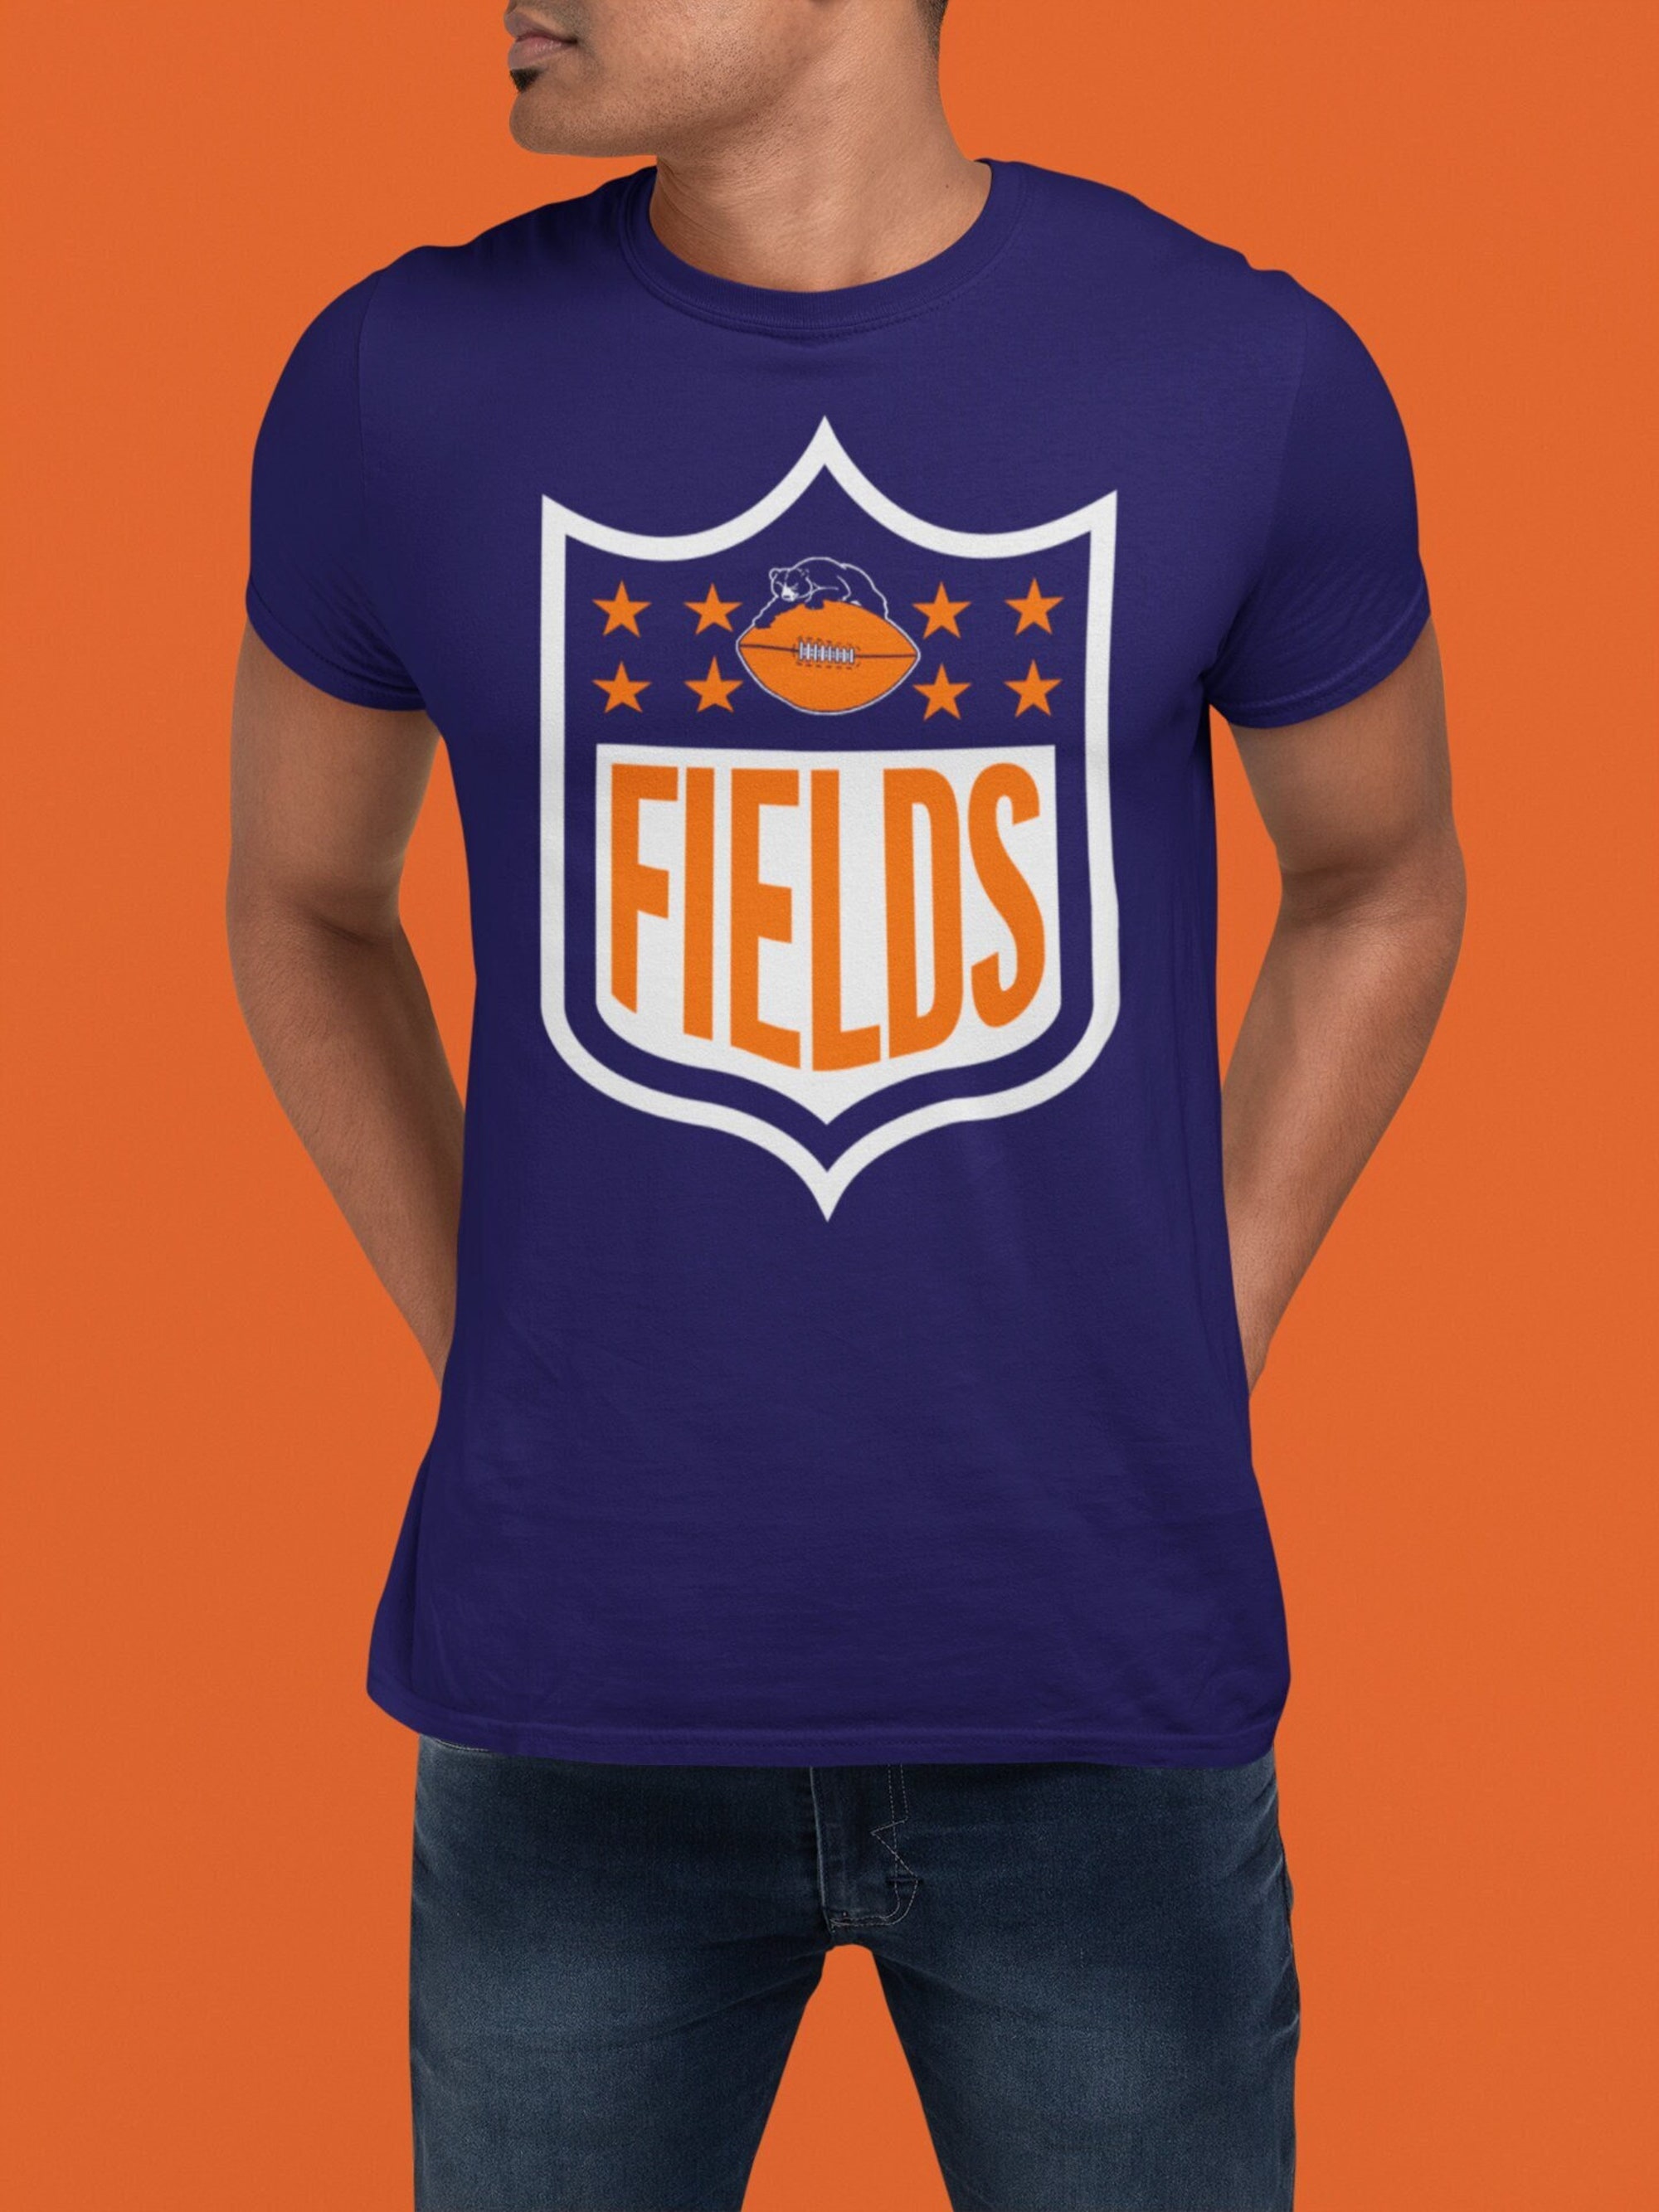 Discover SOLDIER Fields Shirt| Chicago Bears shirt